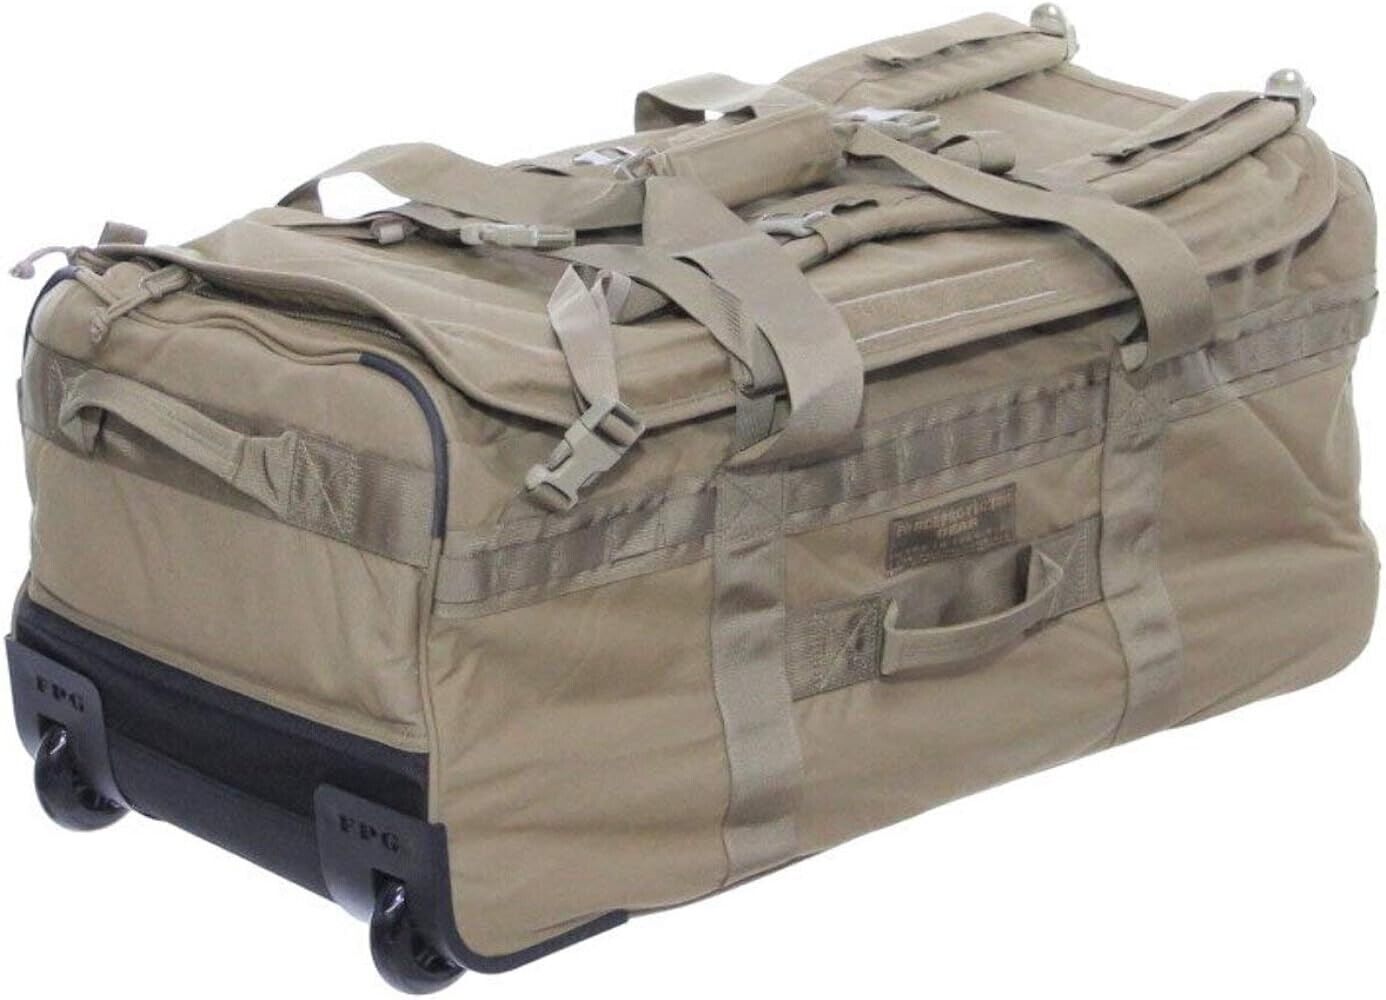 USMC Force Protector Gear (Poor) Cond. Deployer USGI Deployment Bag on Wheels